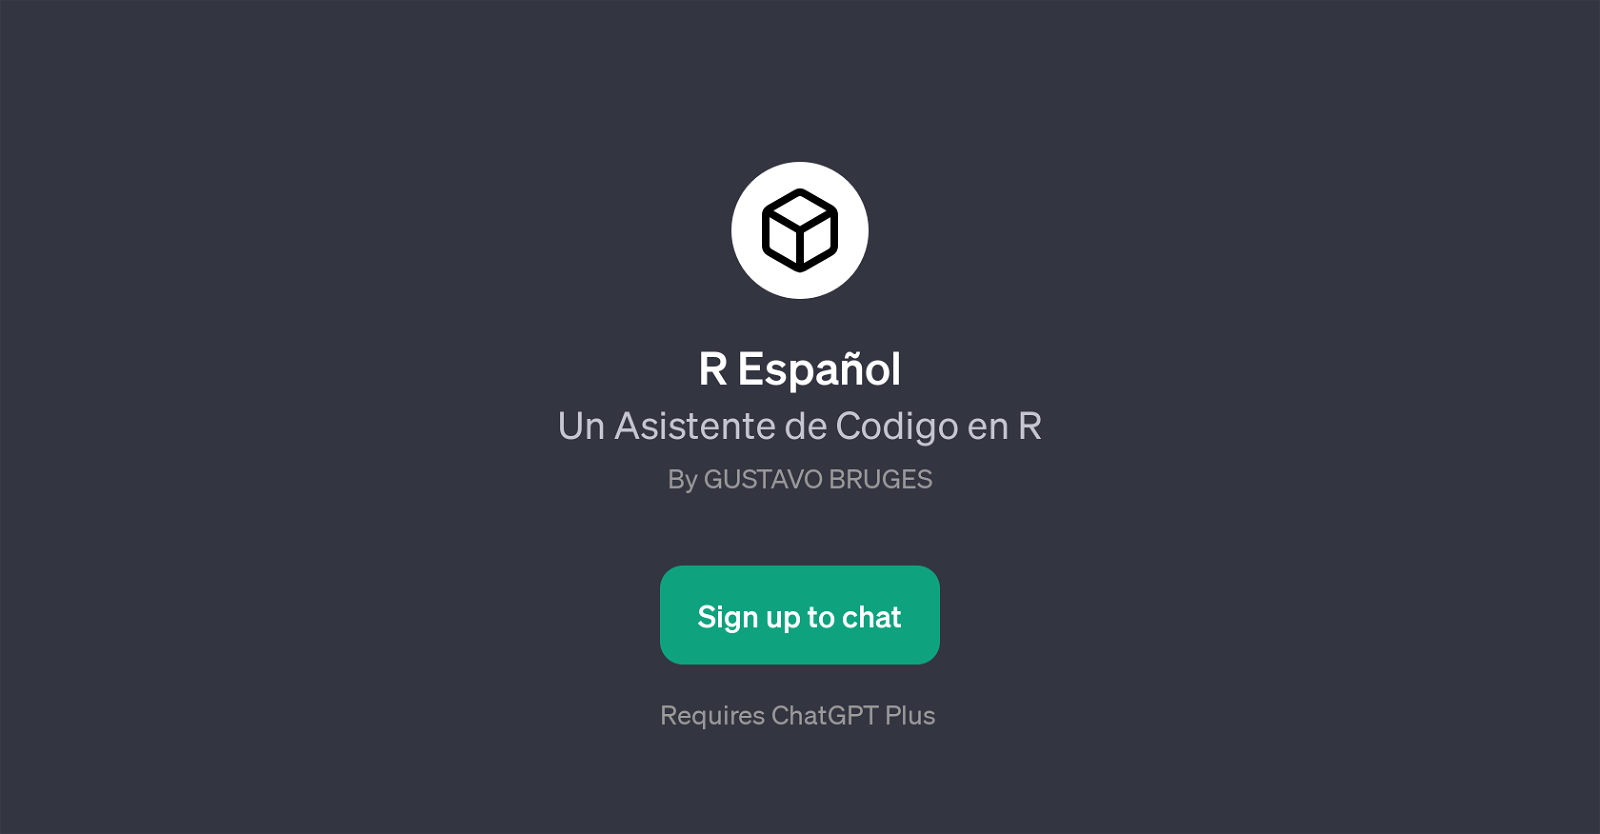 R Espaol website